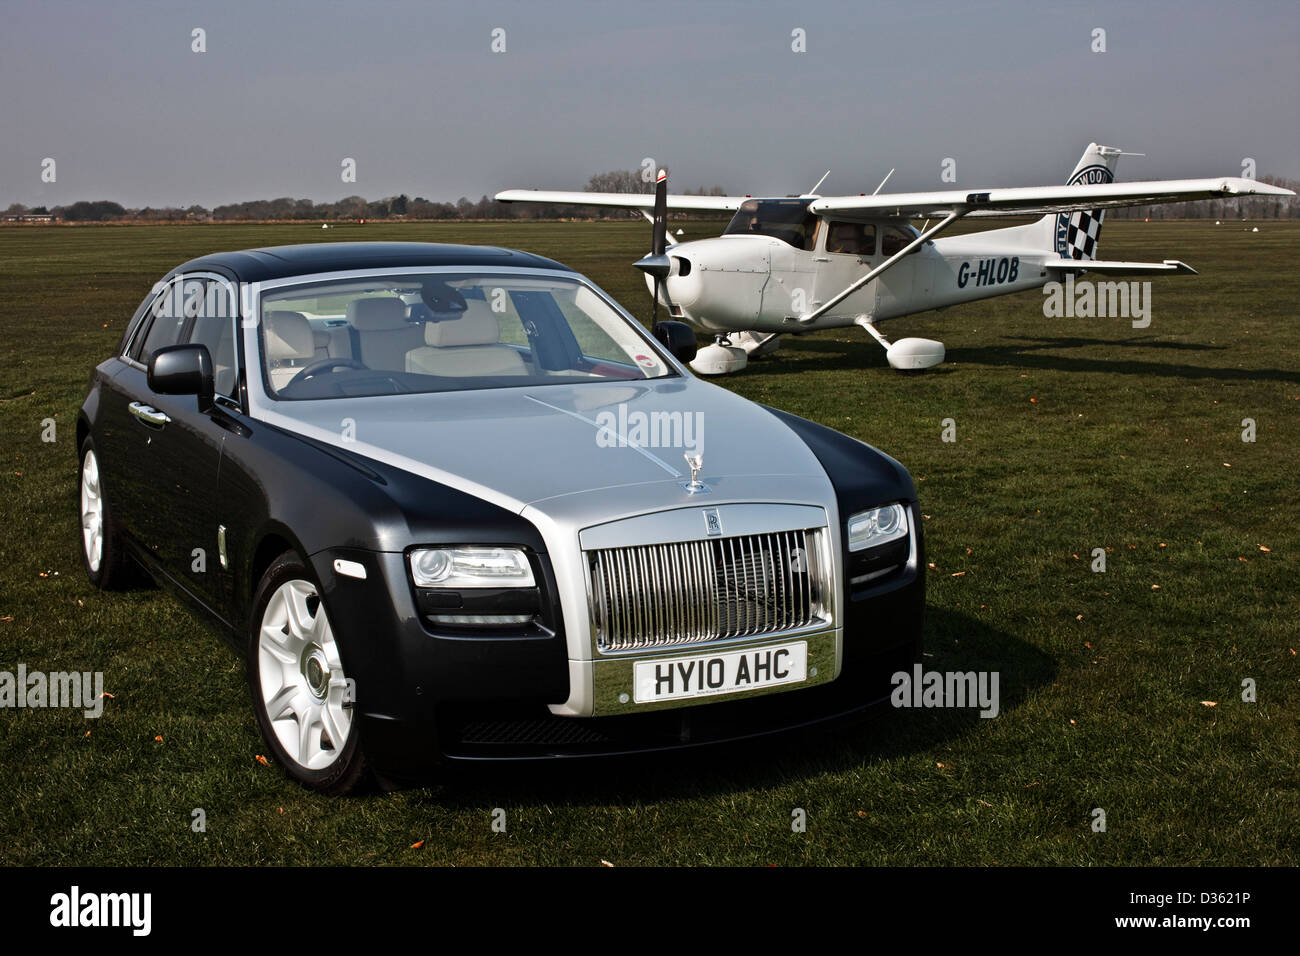 Rolls Royce Ghost luxury saloon car, Goodwood, UK, 15 04 2010 Stock Photo